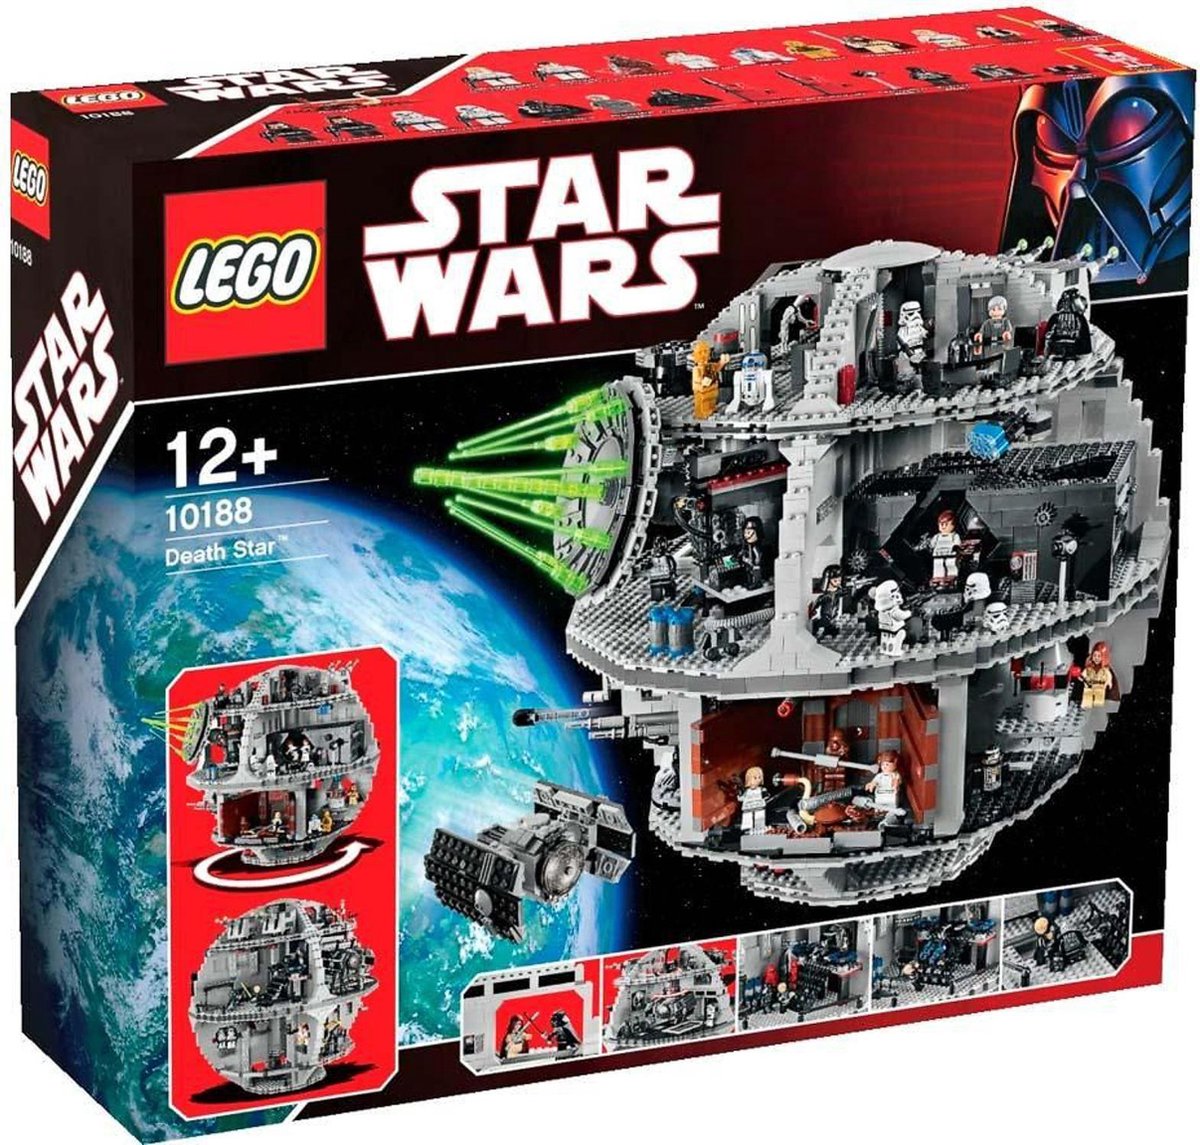 Roestig toetje aan de andere kant, LEGO Star Wars Death Star - 10188 | bol.com